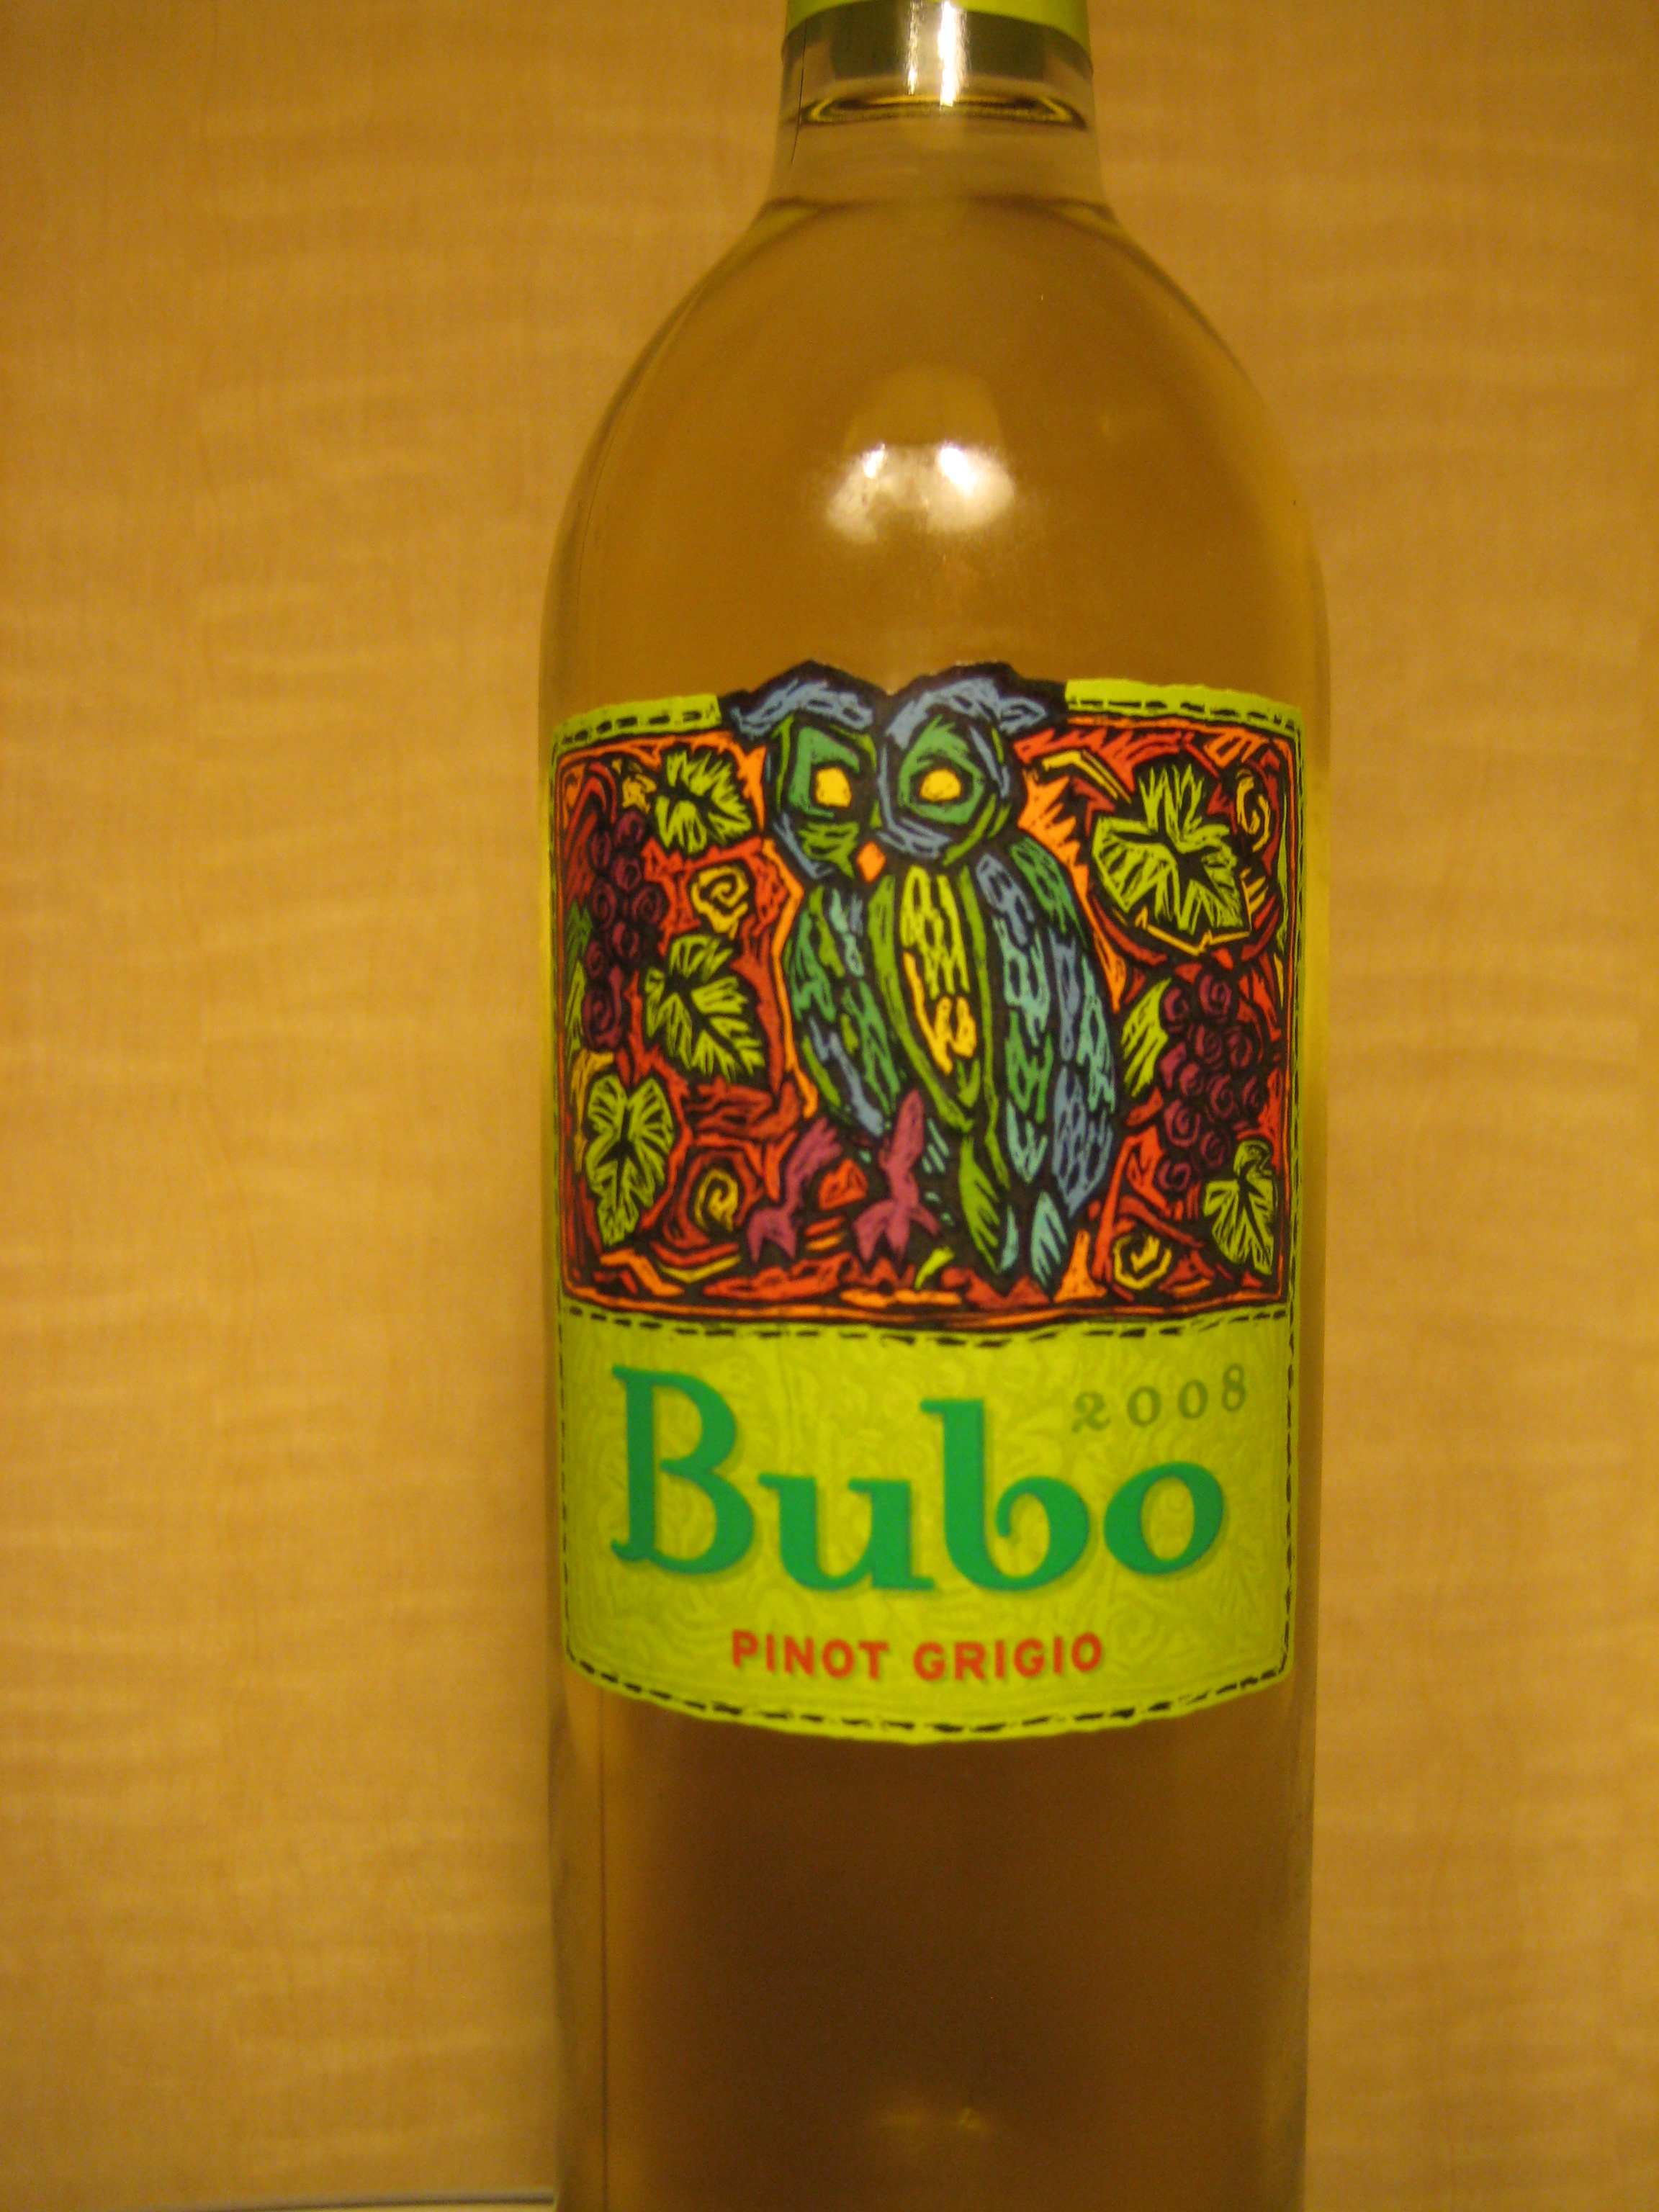 Bubo listing